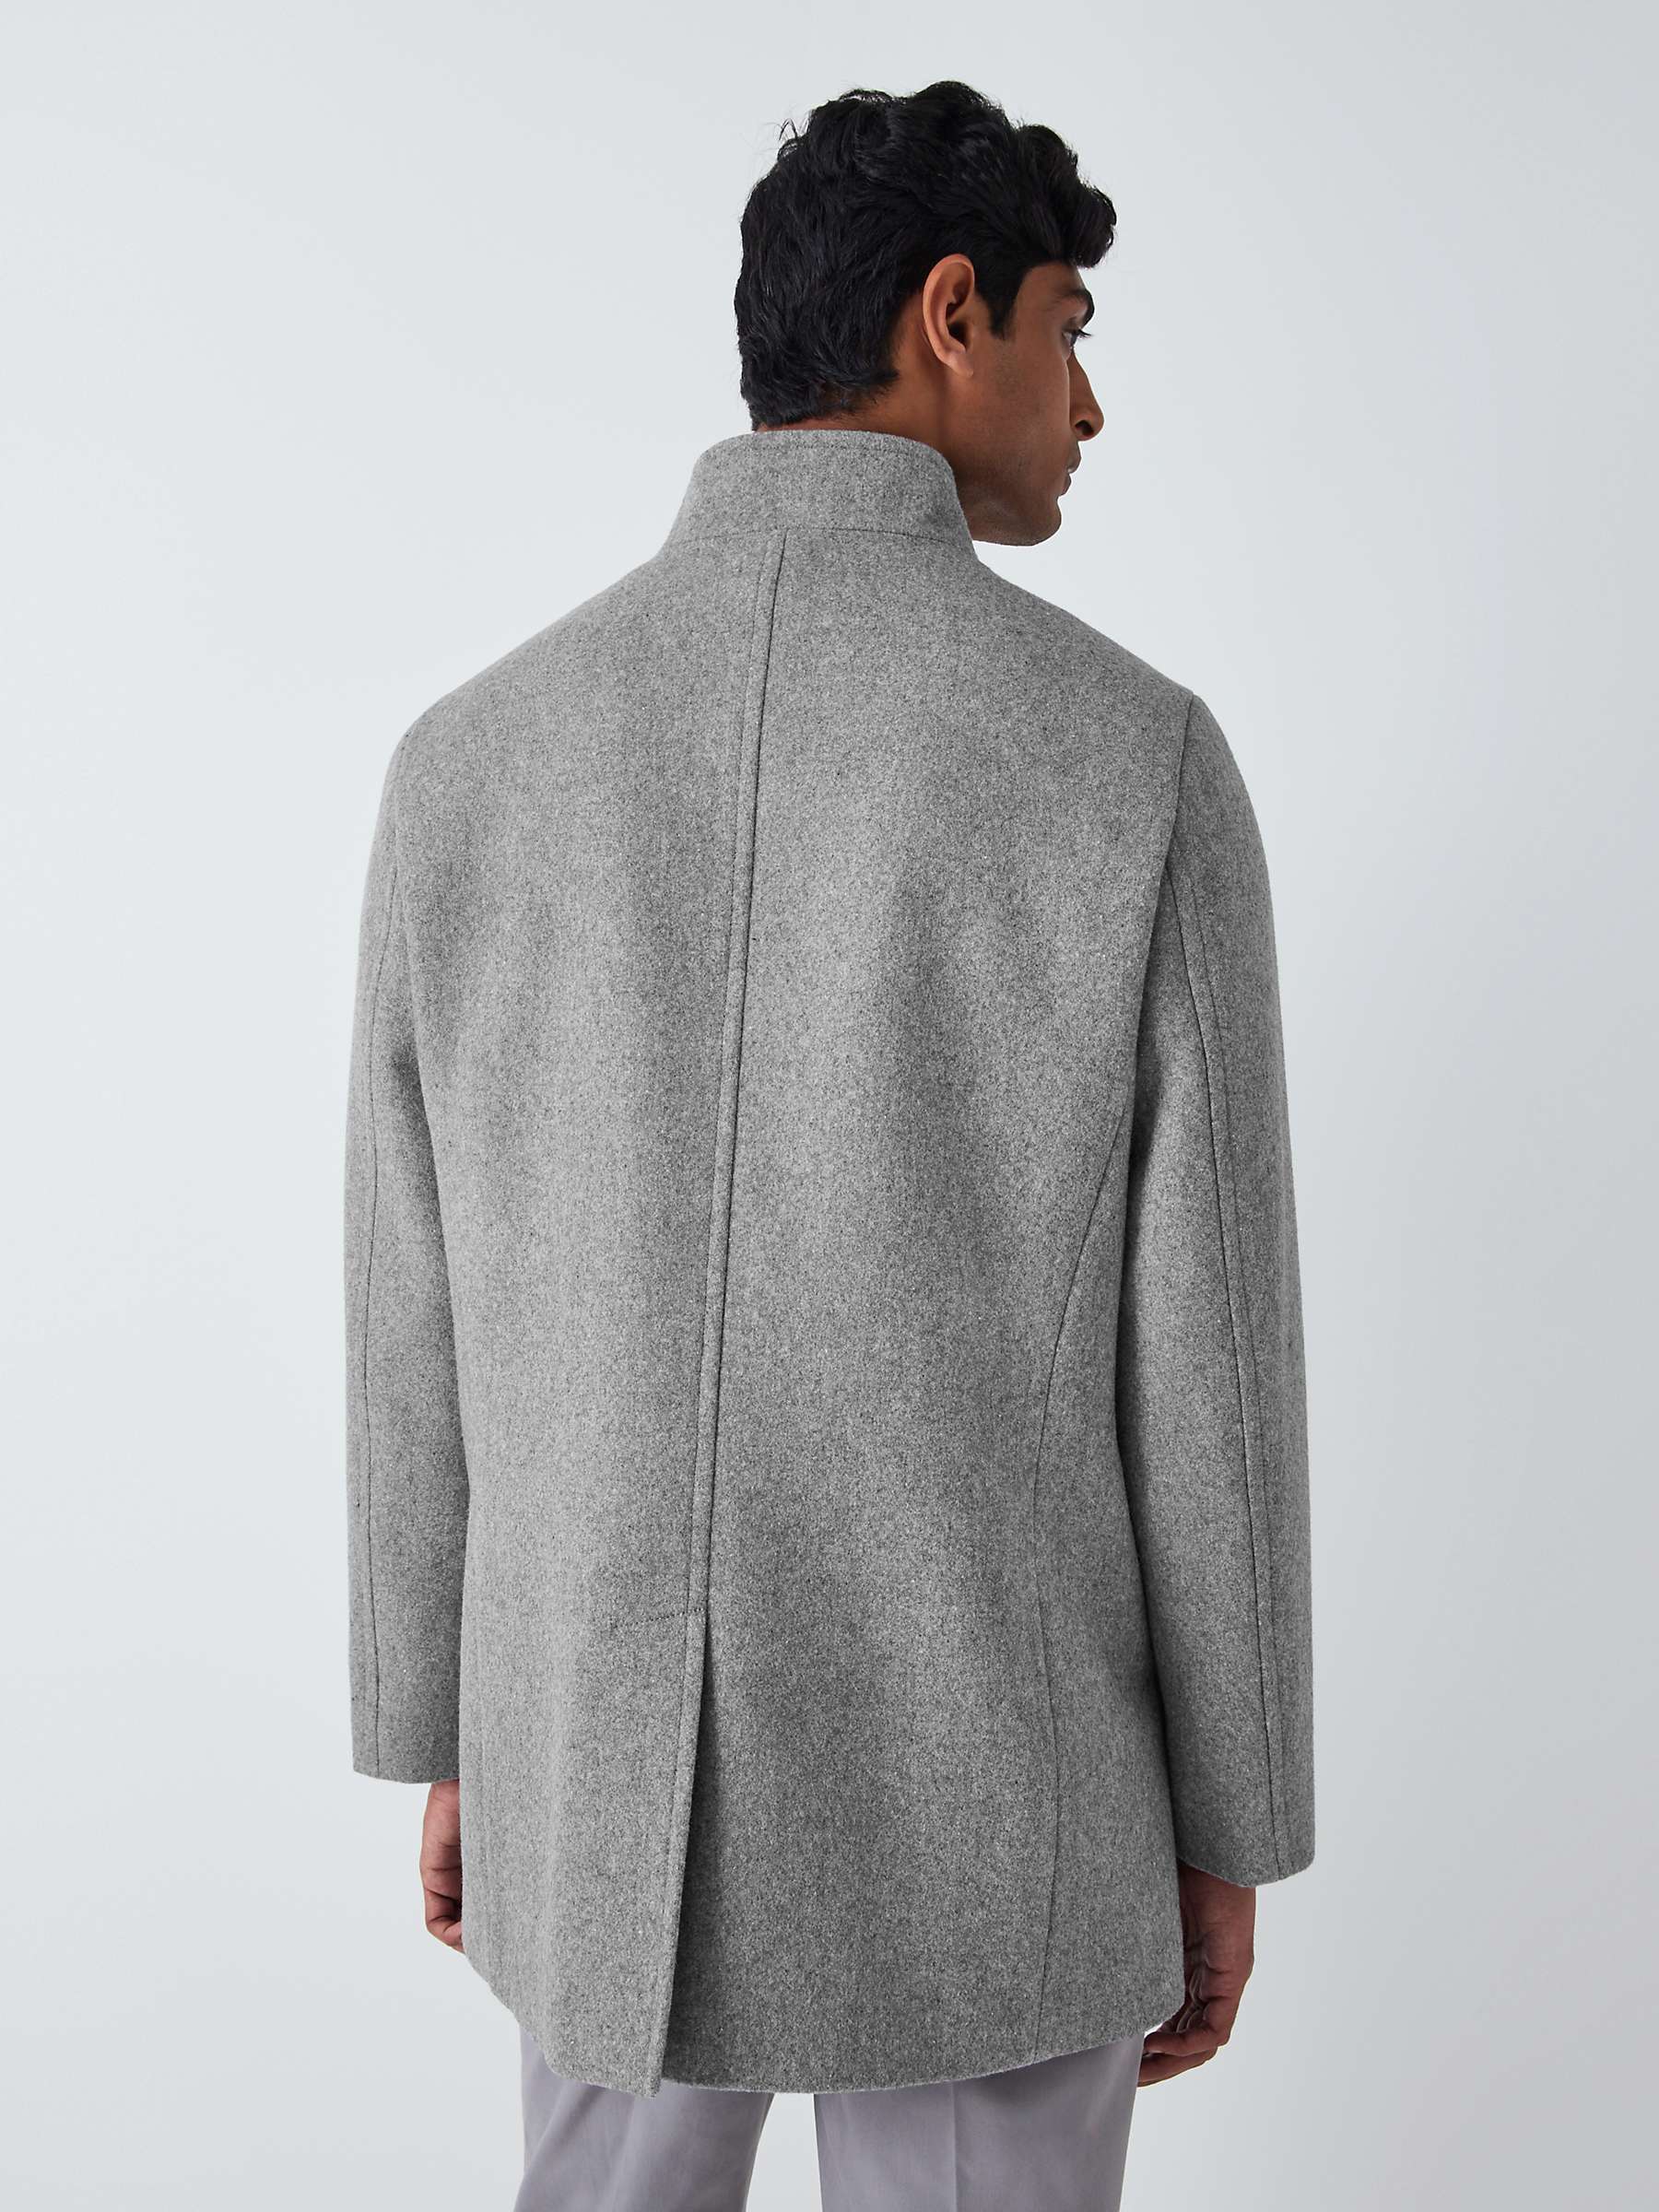 Kin Bonded Wool Blend Overcoat, Grey Melange at John Lewis & Partners